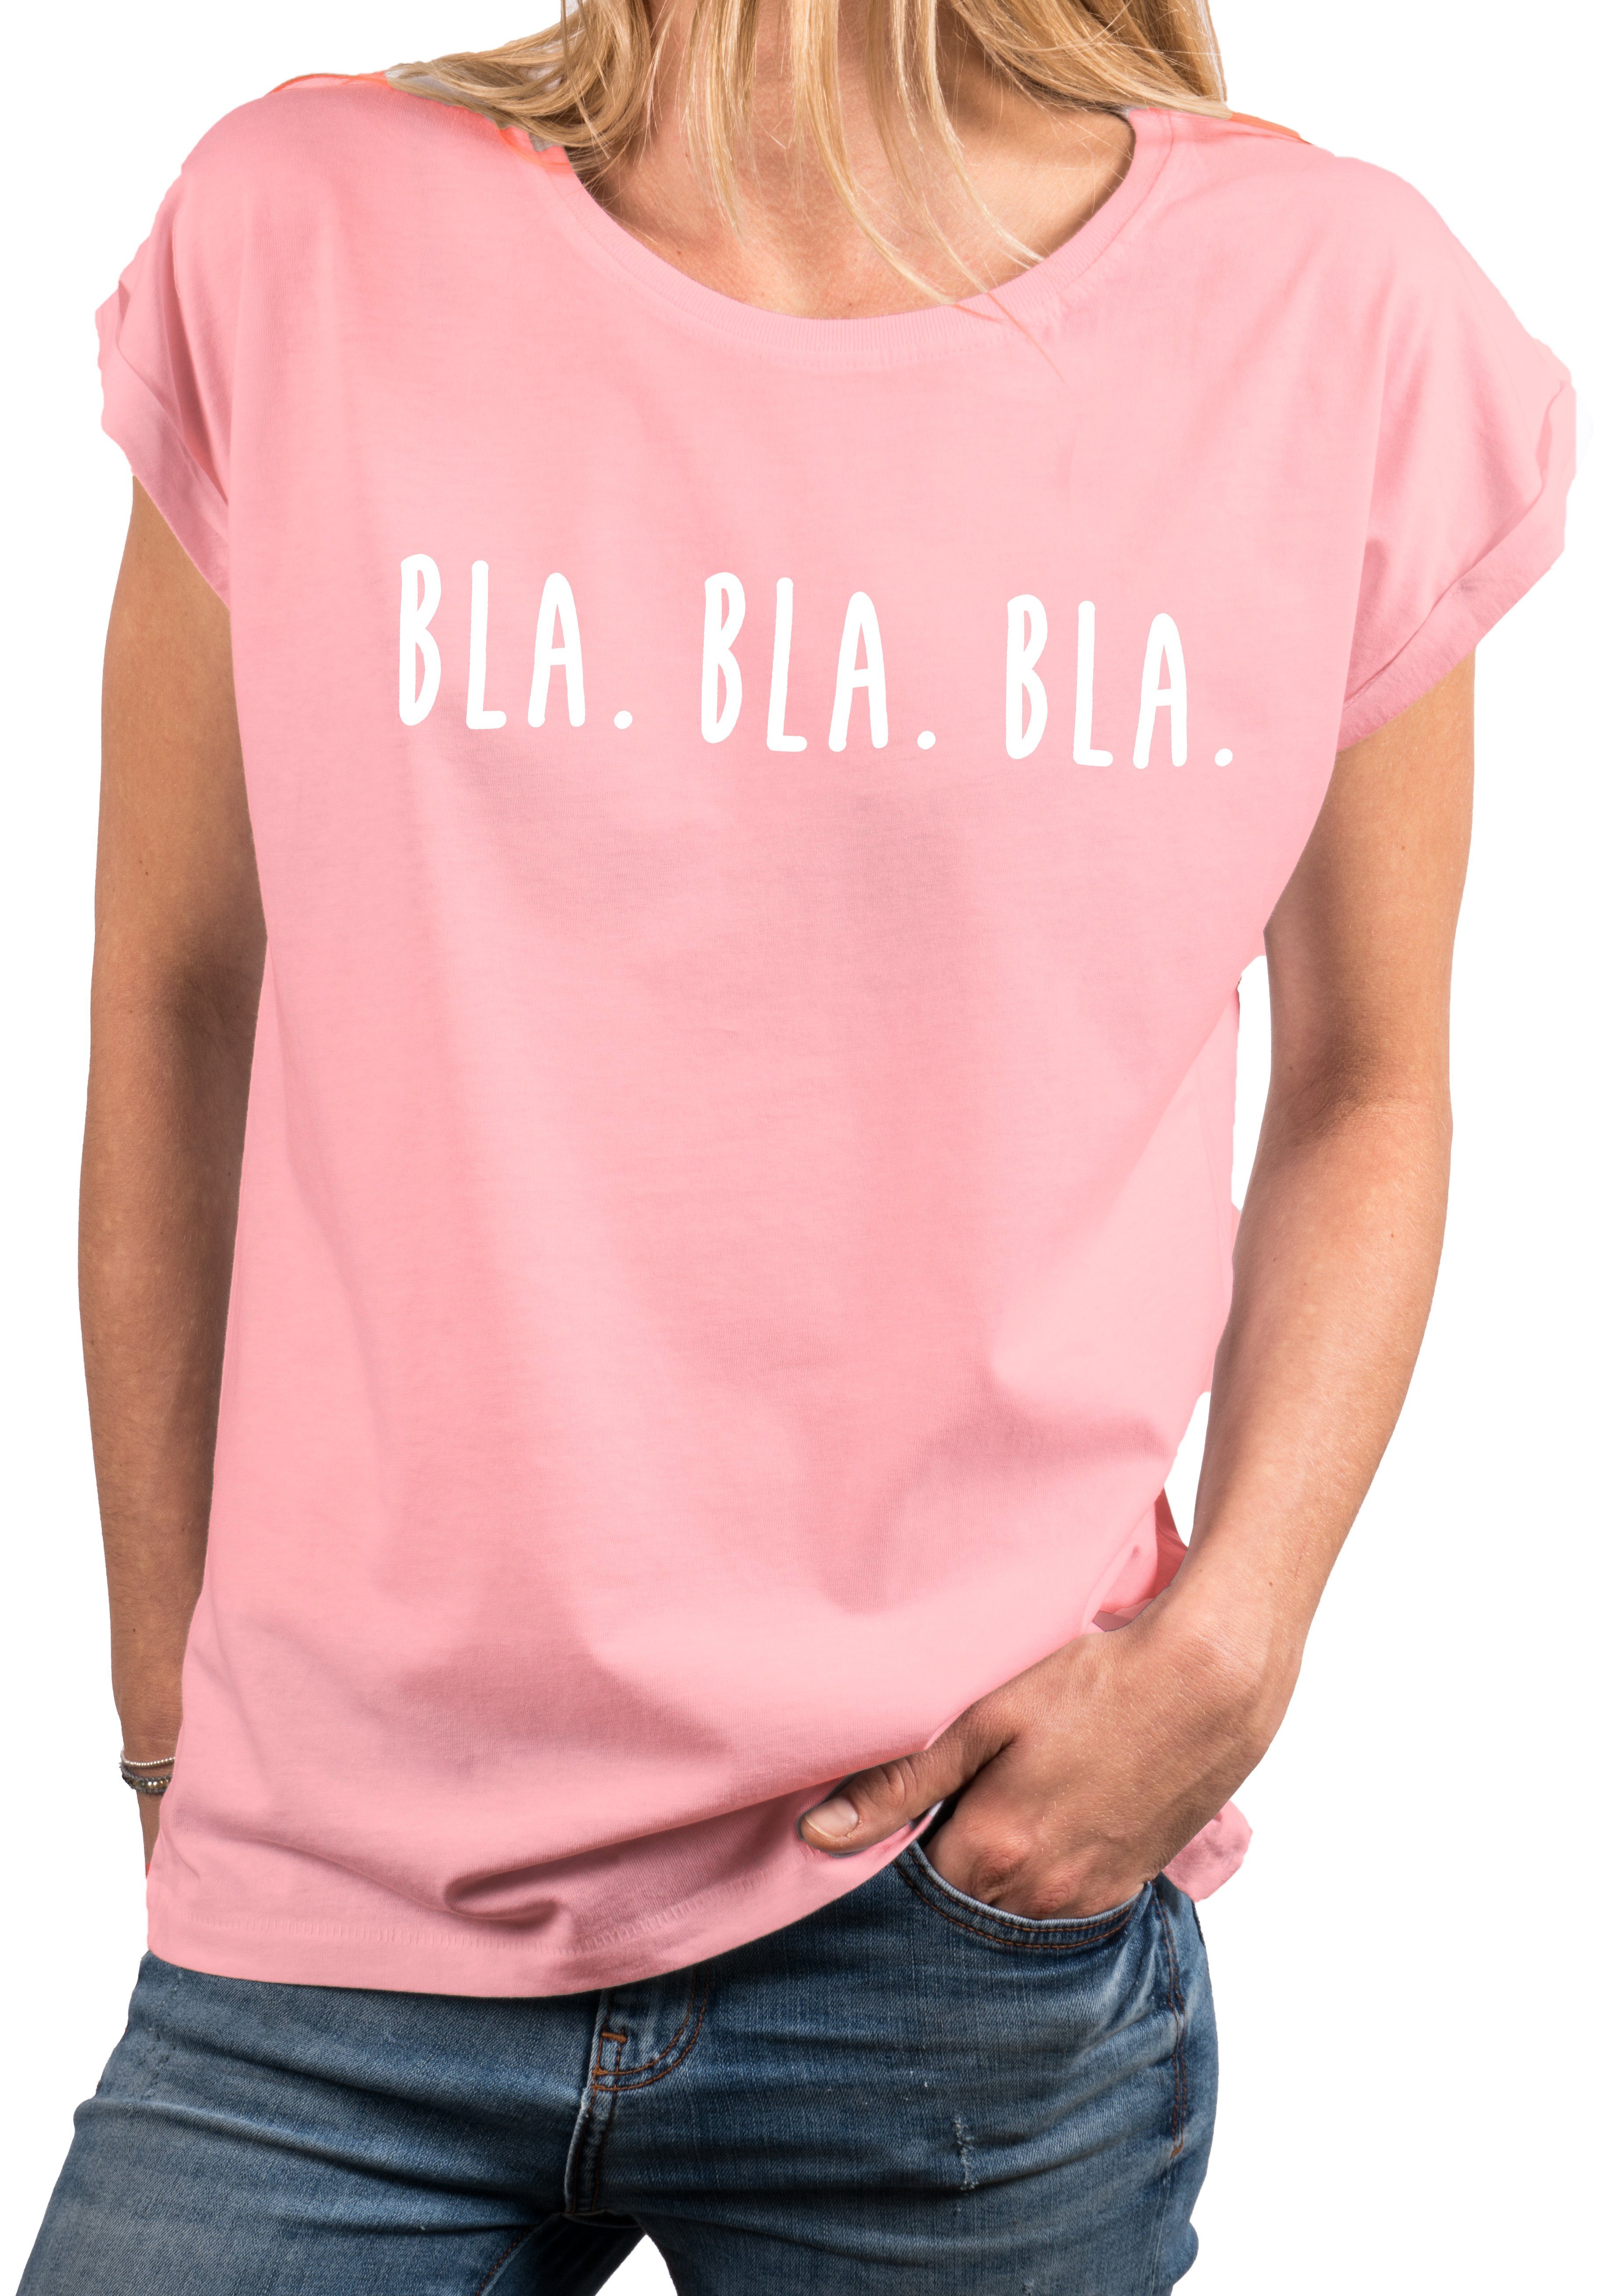 MAKAYA Print-Shirt Damen Kurzarm Basic Sommer Oberteile Sexy Elegant Lustig Spruch Bla (Schriftzug, Schwarz, Blau, Grau) Baumwolle, große Größen Rosa